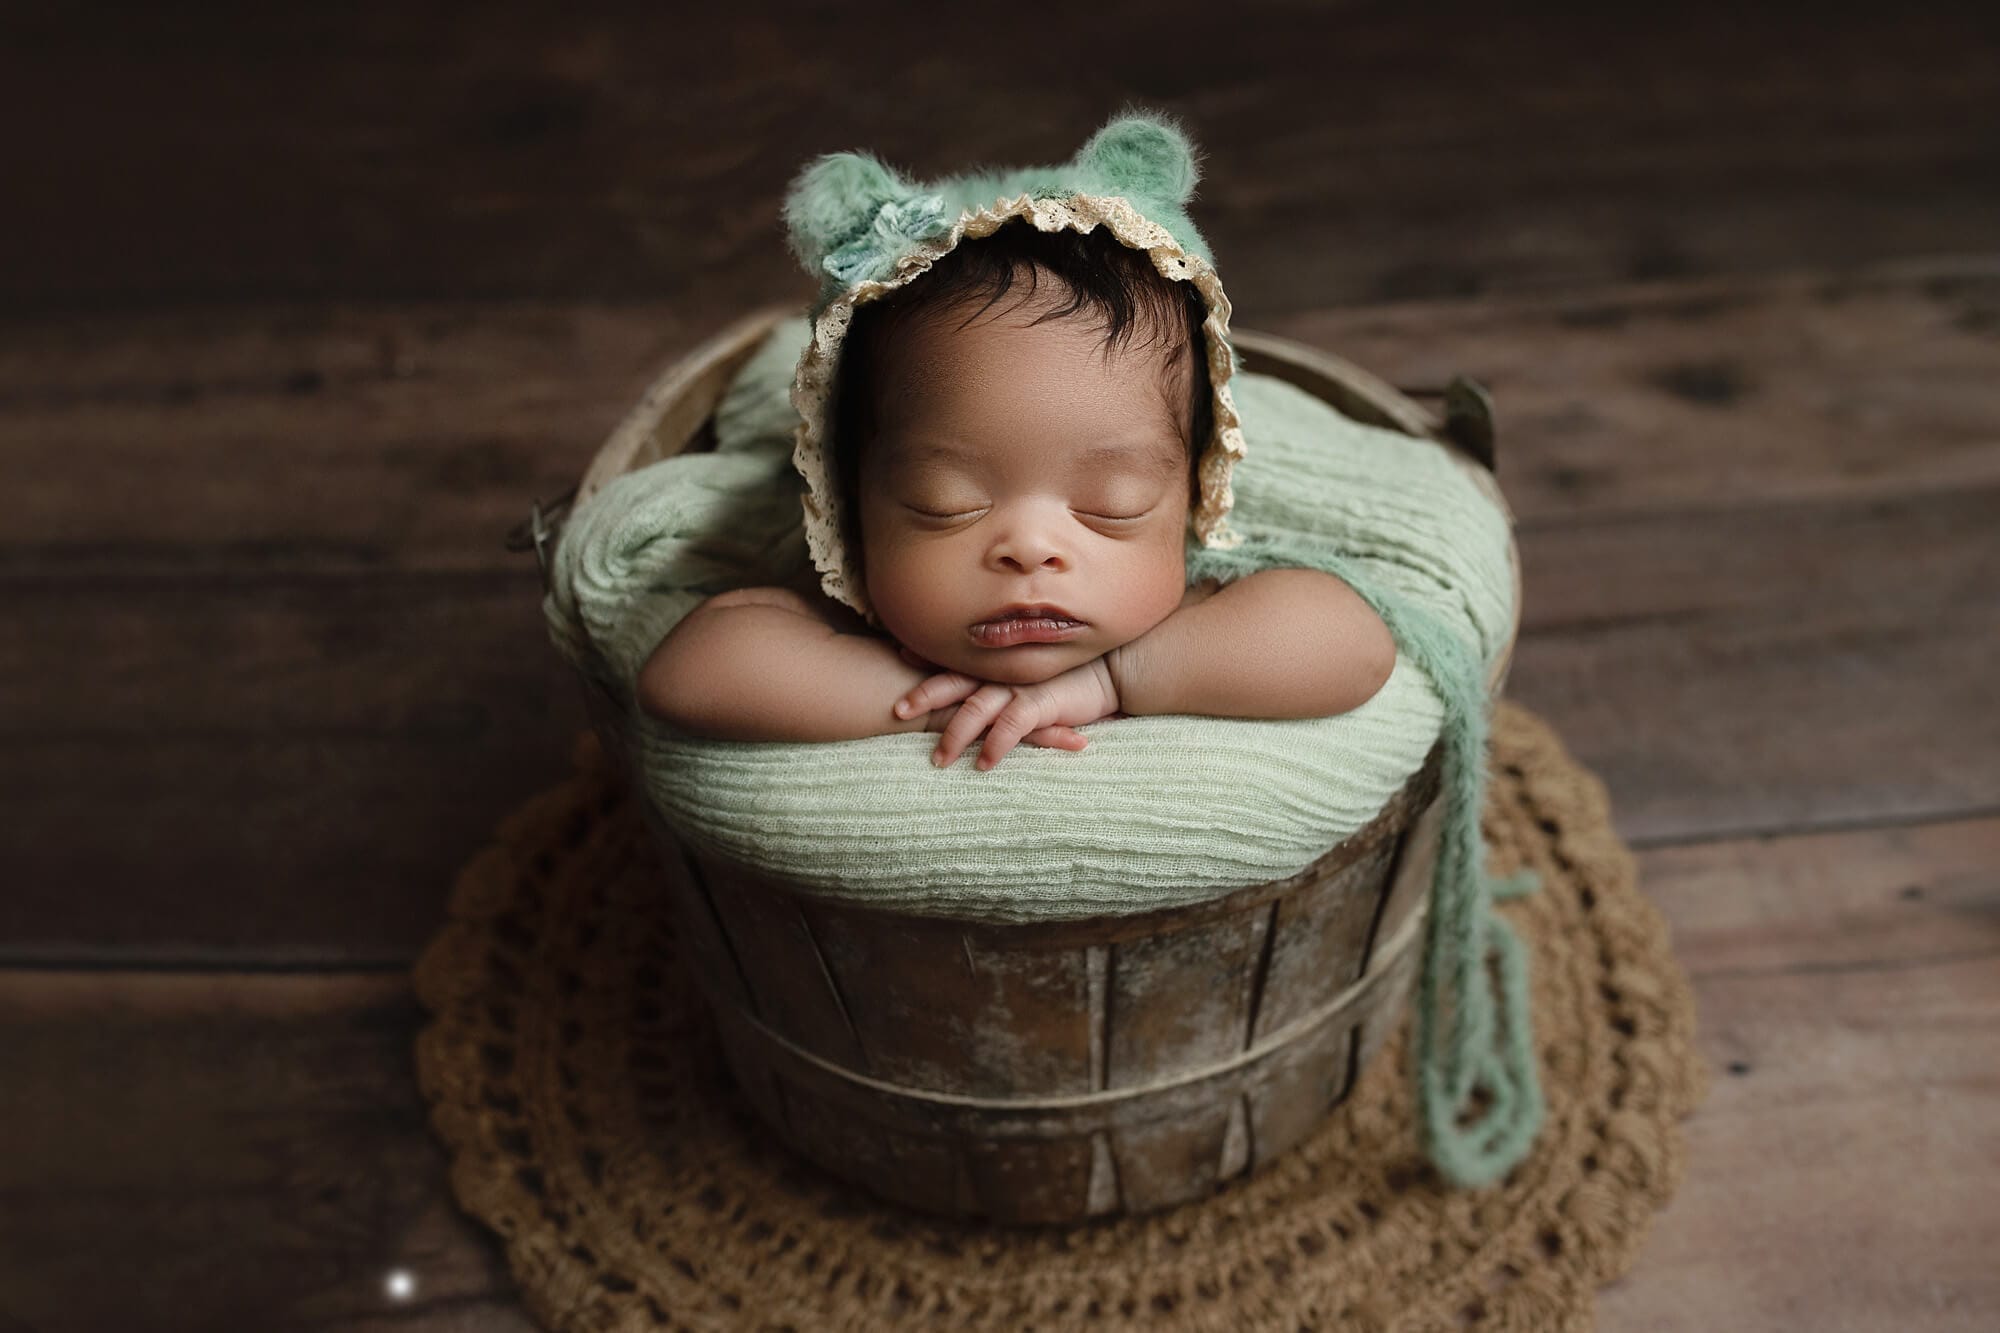 A newborn baby girl in a wooden bucket wearing a mint green bear bonnet.